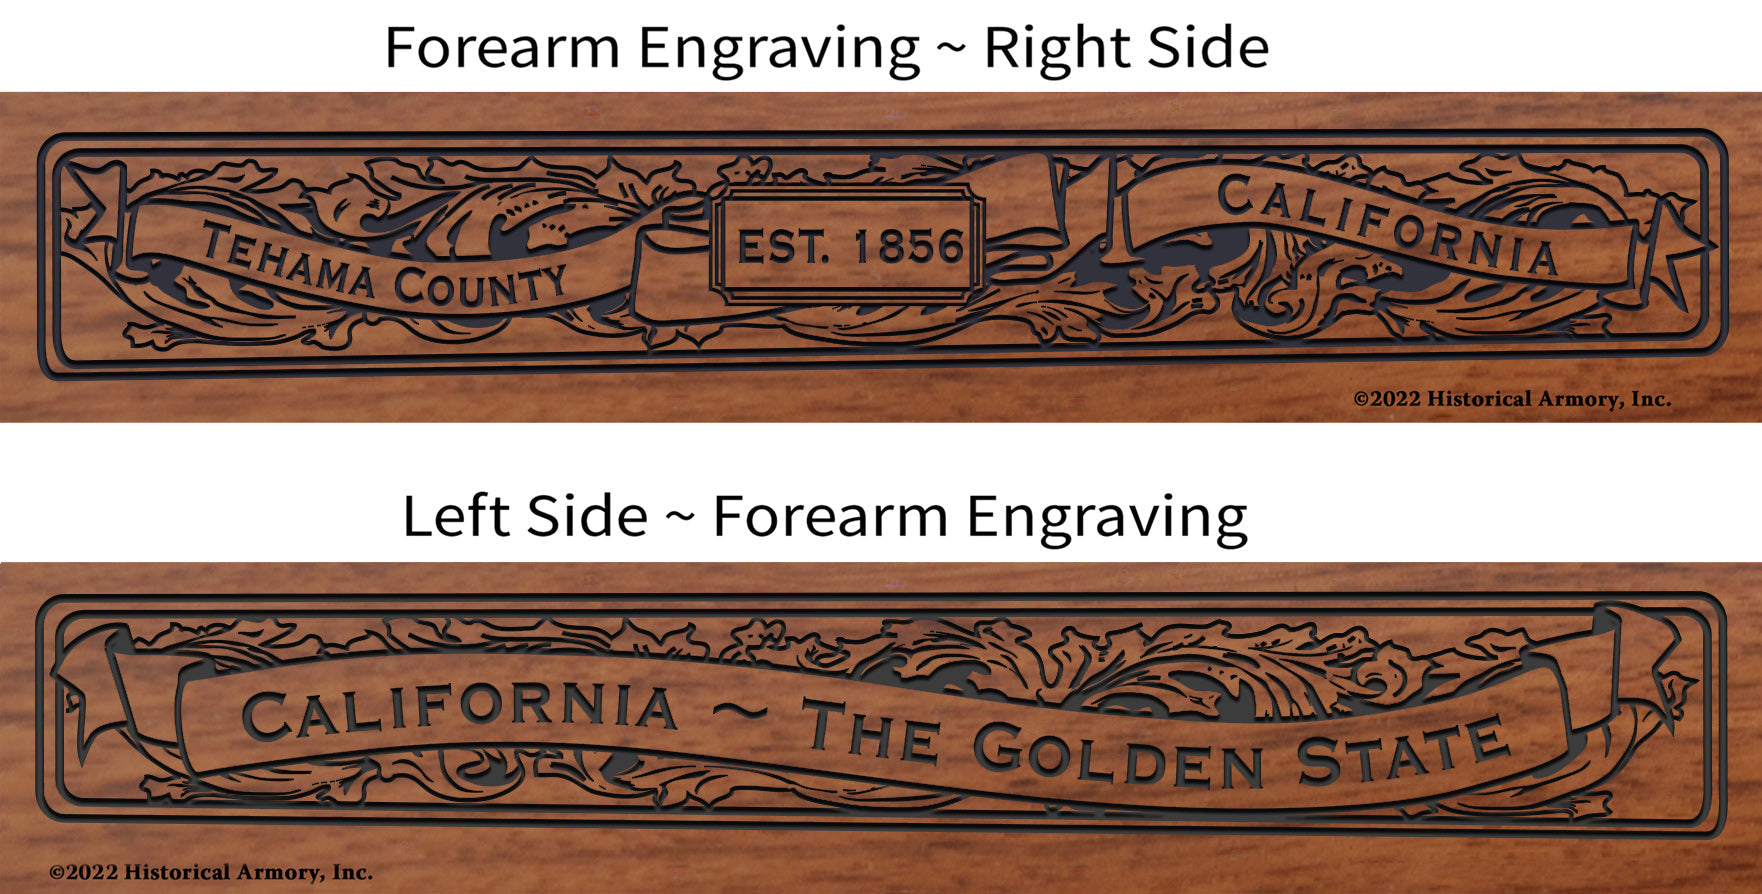 Tehama County California Engraved Rifle Forearm